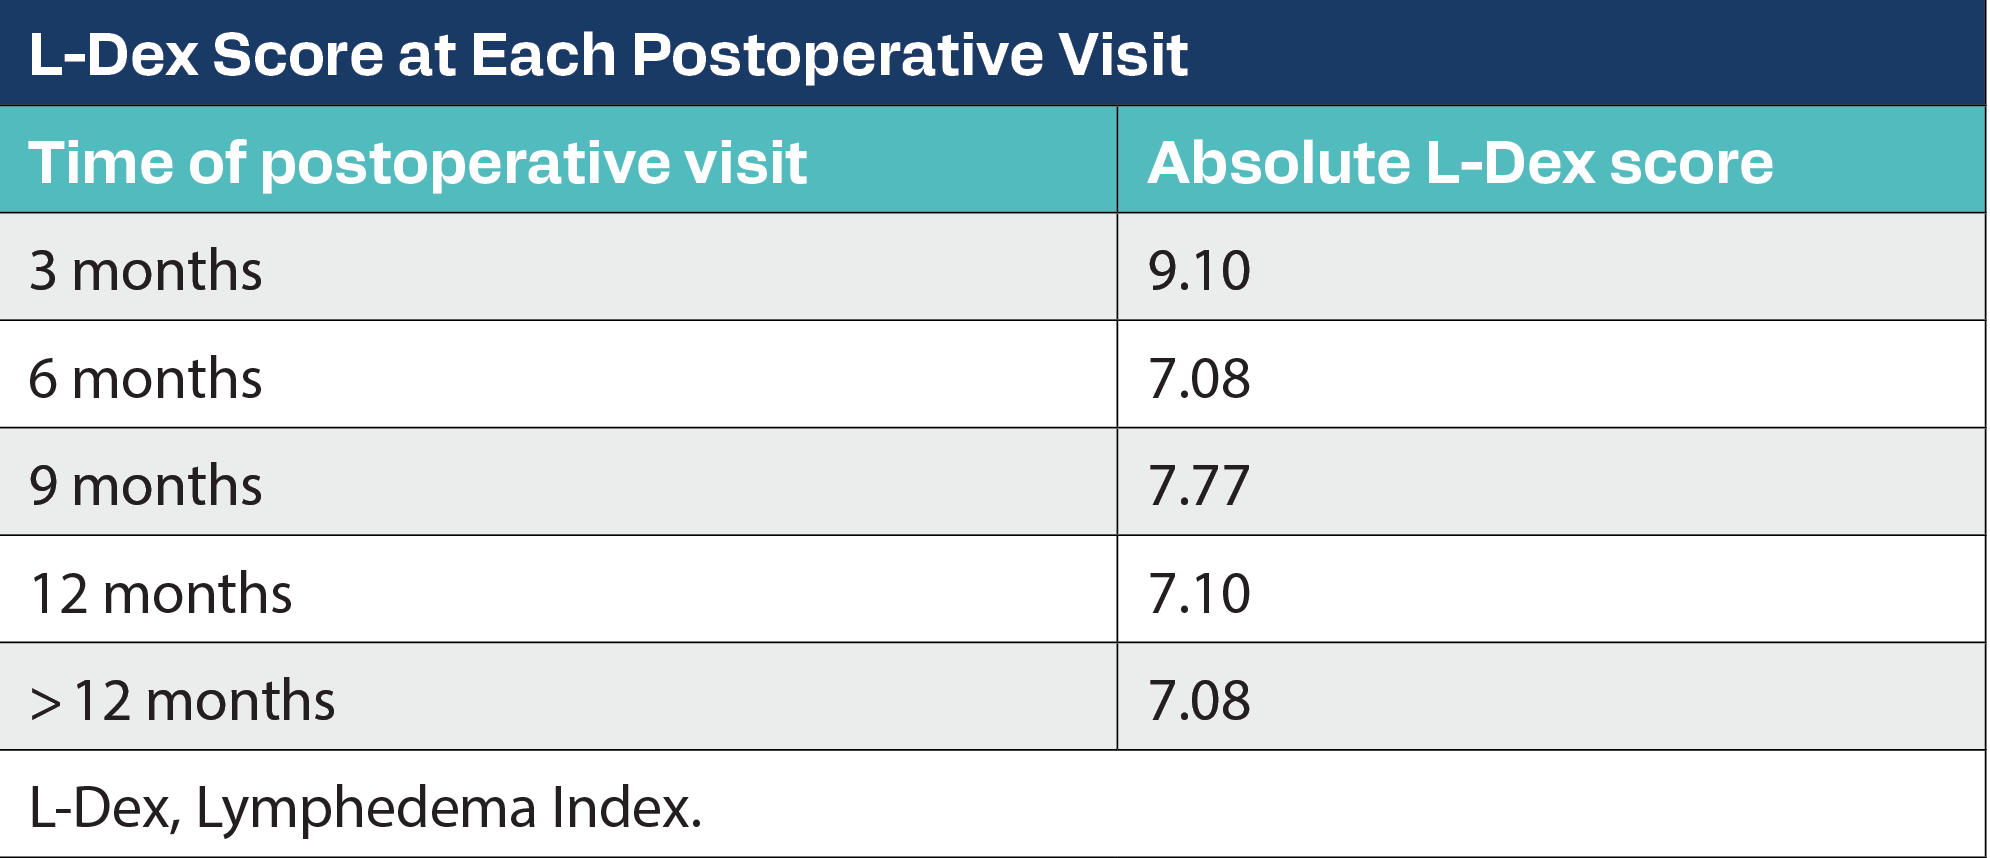 L-Dex Score at Each Postoperative Visit